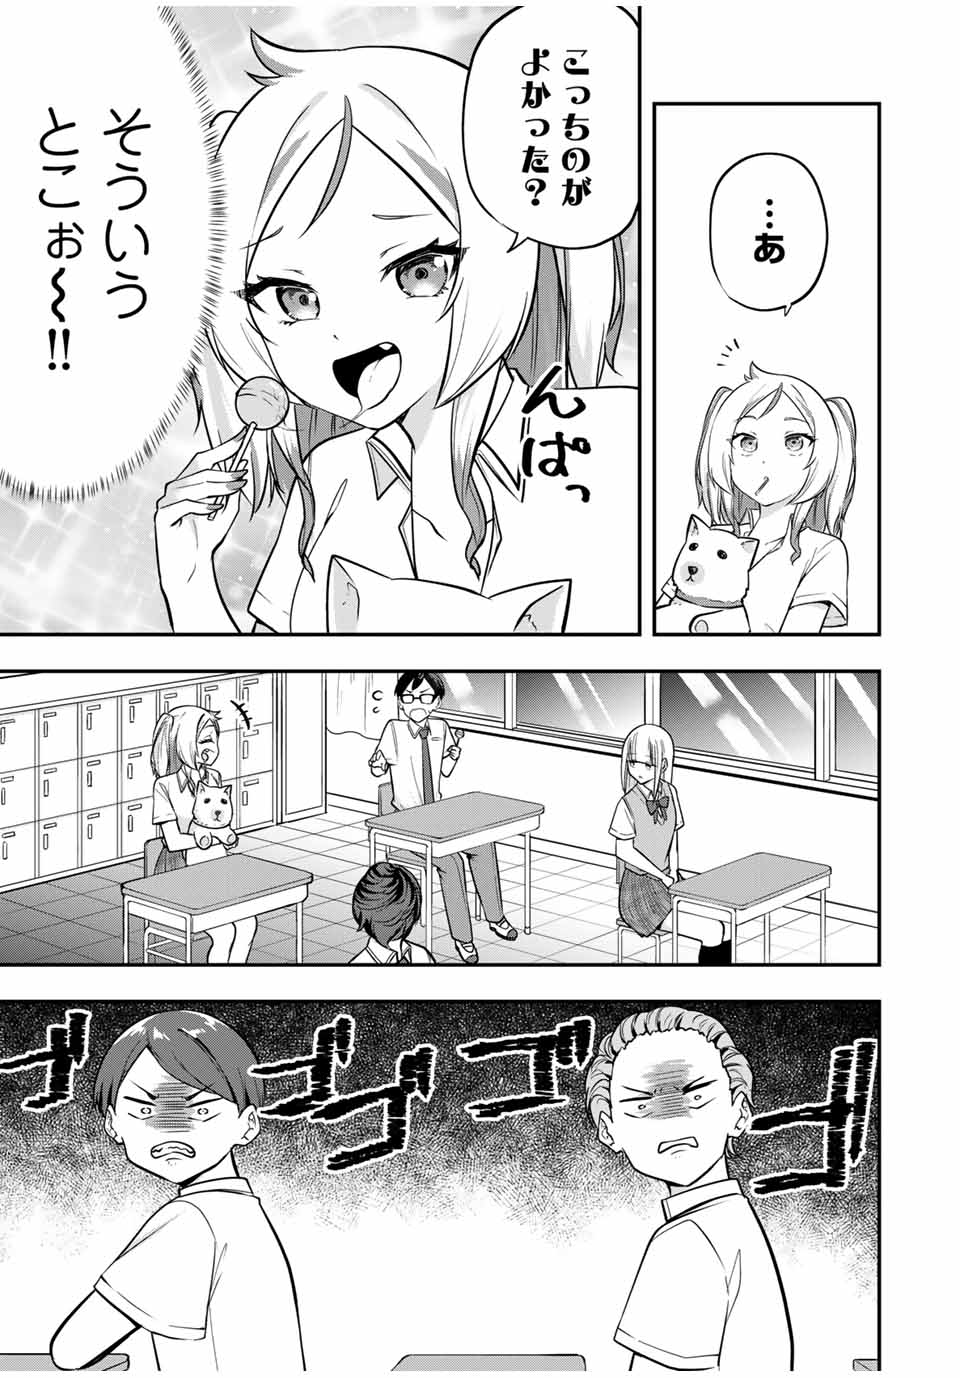 Heroine wa xx Okasegitai - Chapter 2 - Page 3